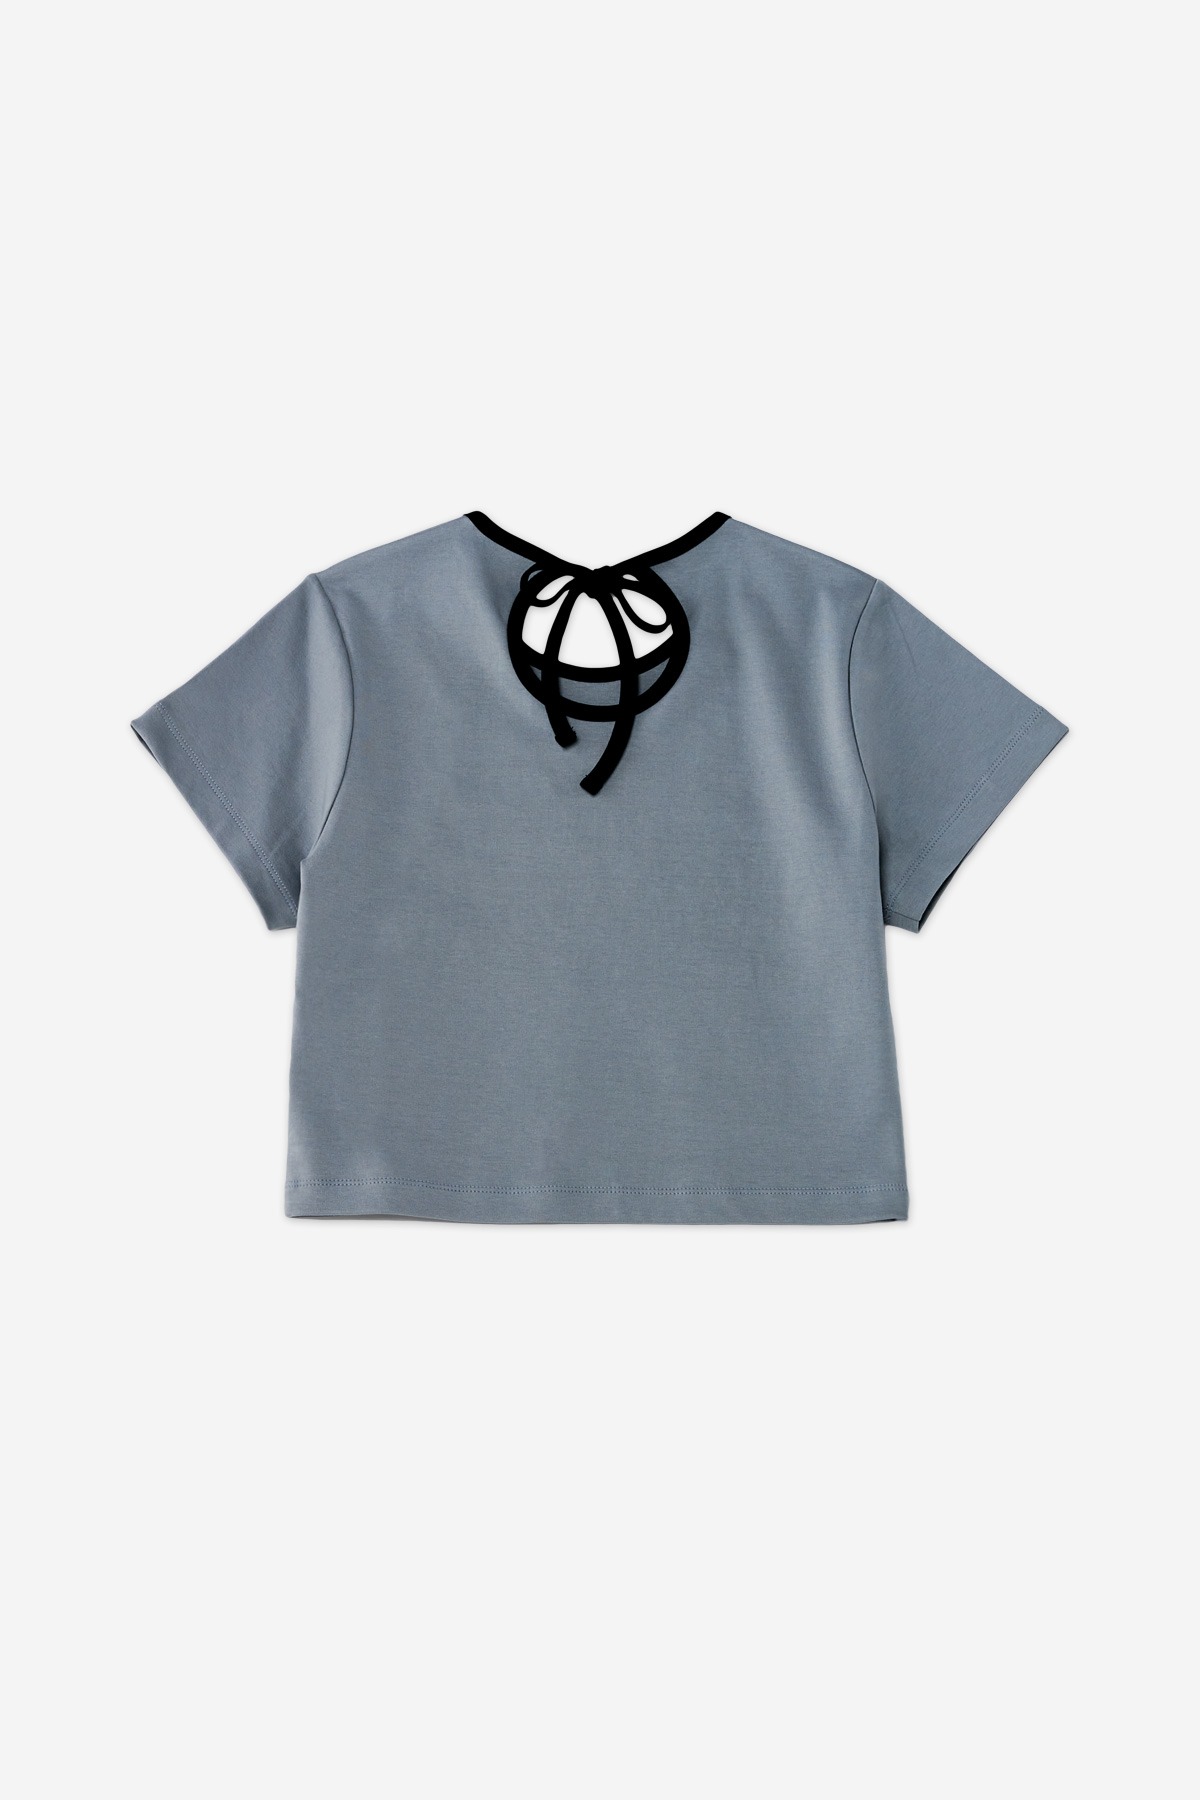 Eclipse T-shirt (2colors)_Moss gray, 여성의류,디자이너브랜드,피이이피,peep